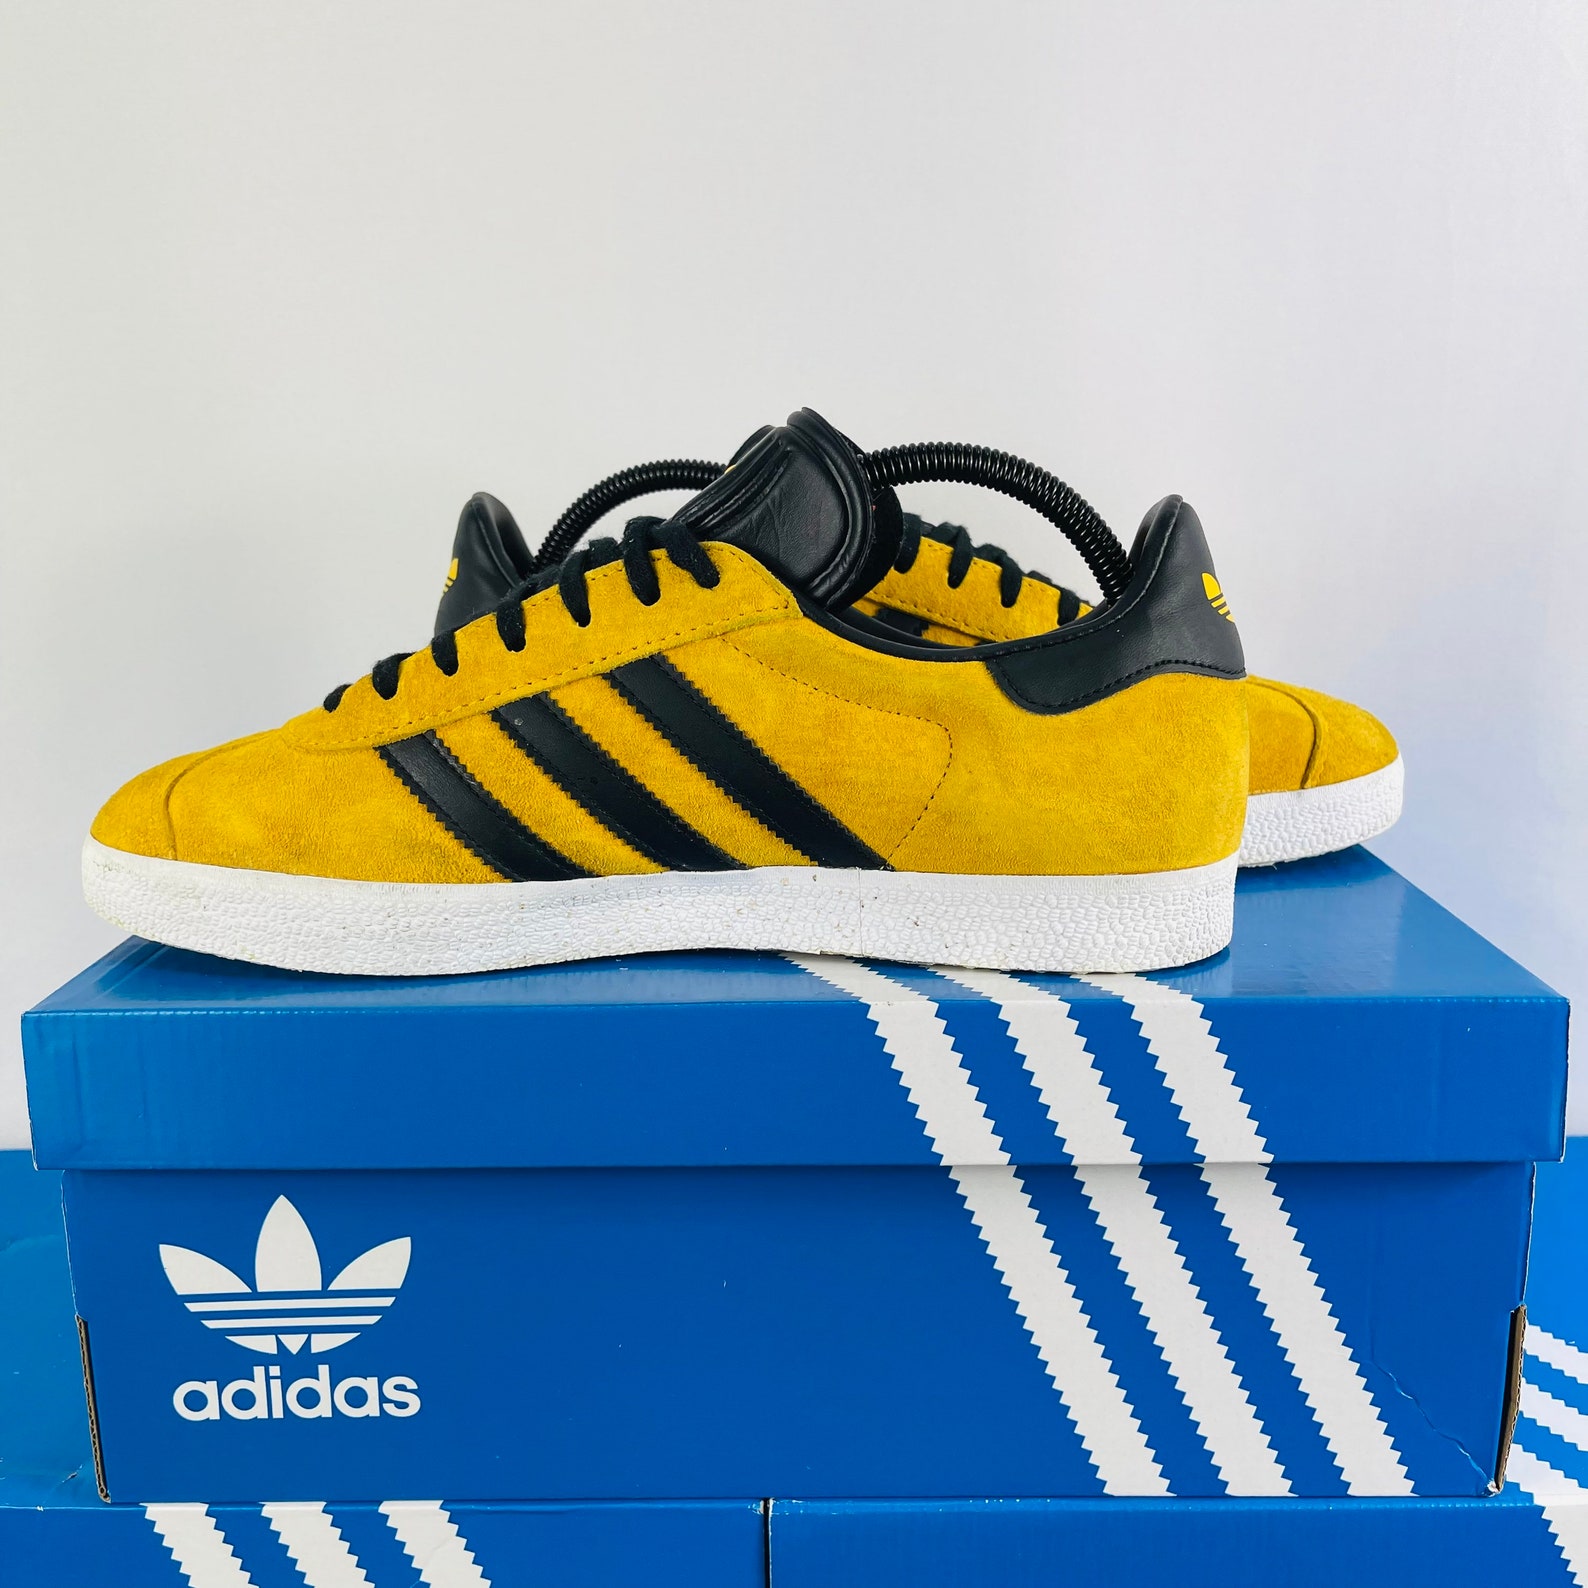 Rare Unisex Adidas Gazelle 2016 Yellow And Black Trainers | Etsy